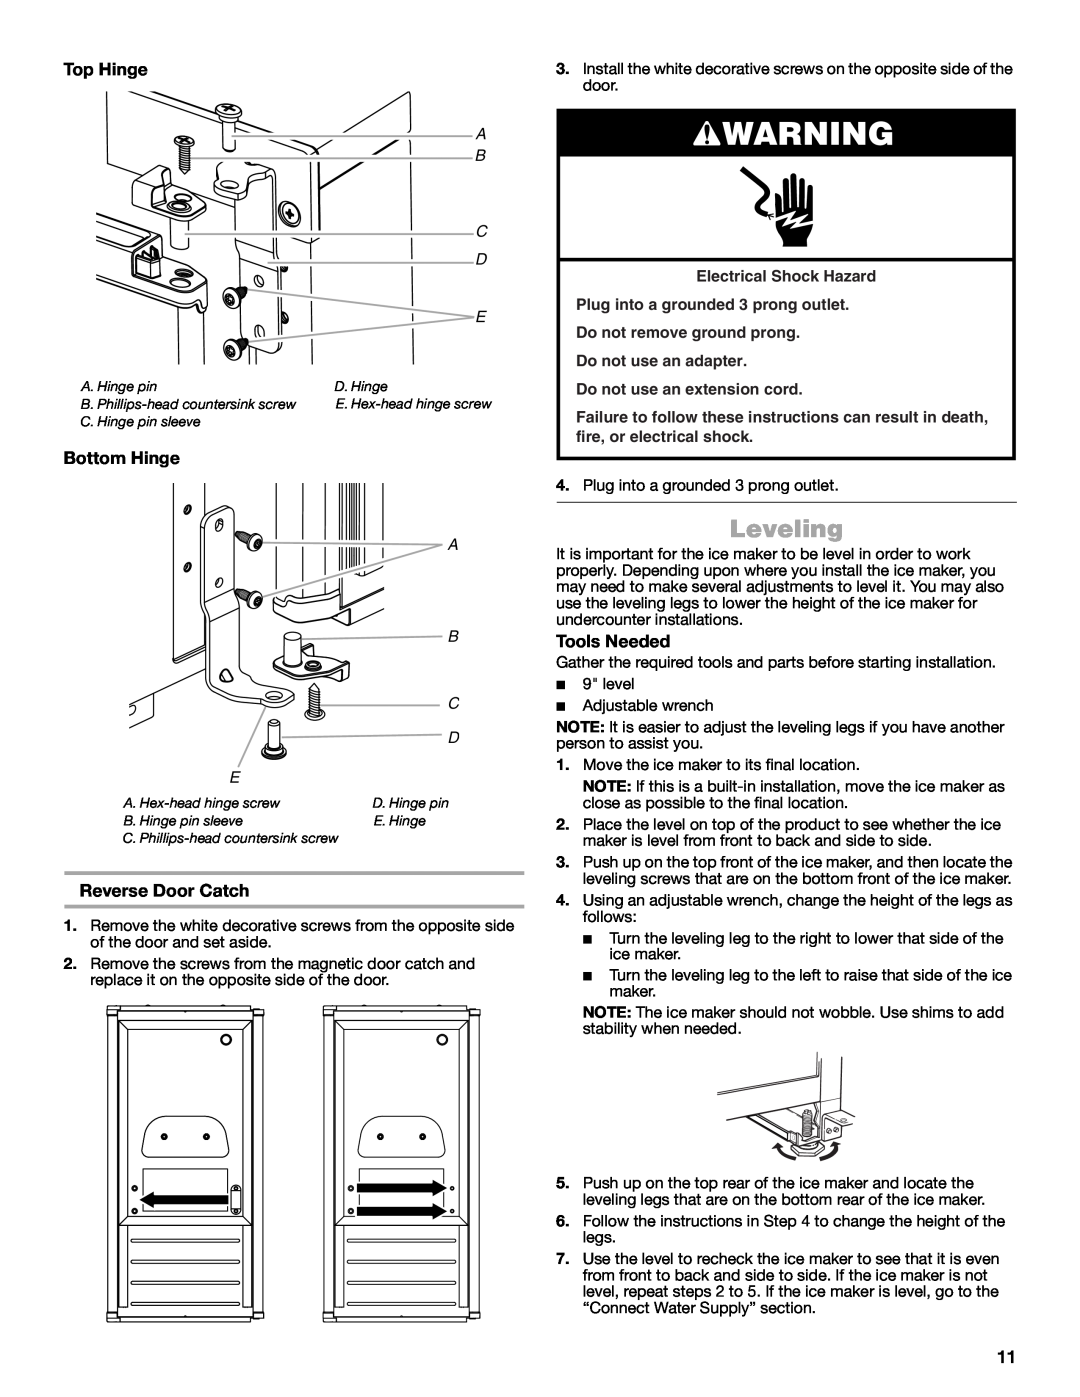 Jenn-Air W10519943B manual Leveling, Top Hinge, Bottom Hinge, Reverse Door Catch, A B C D E, Tools Needed 